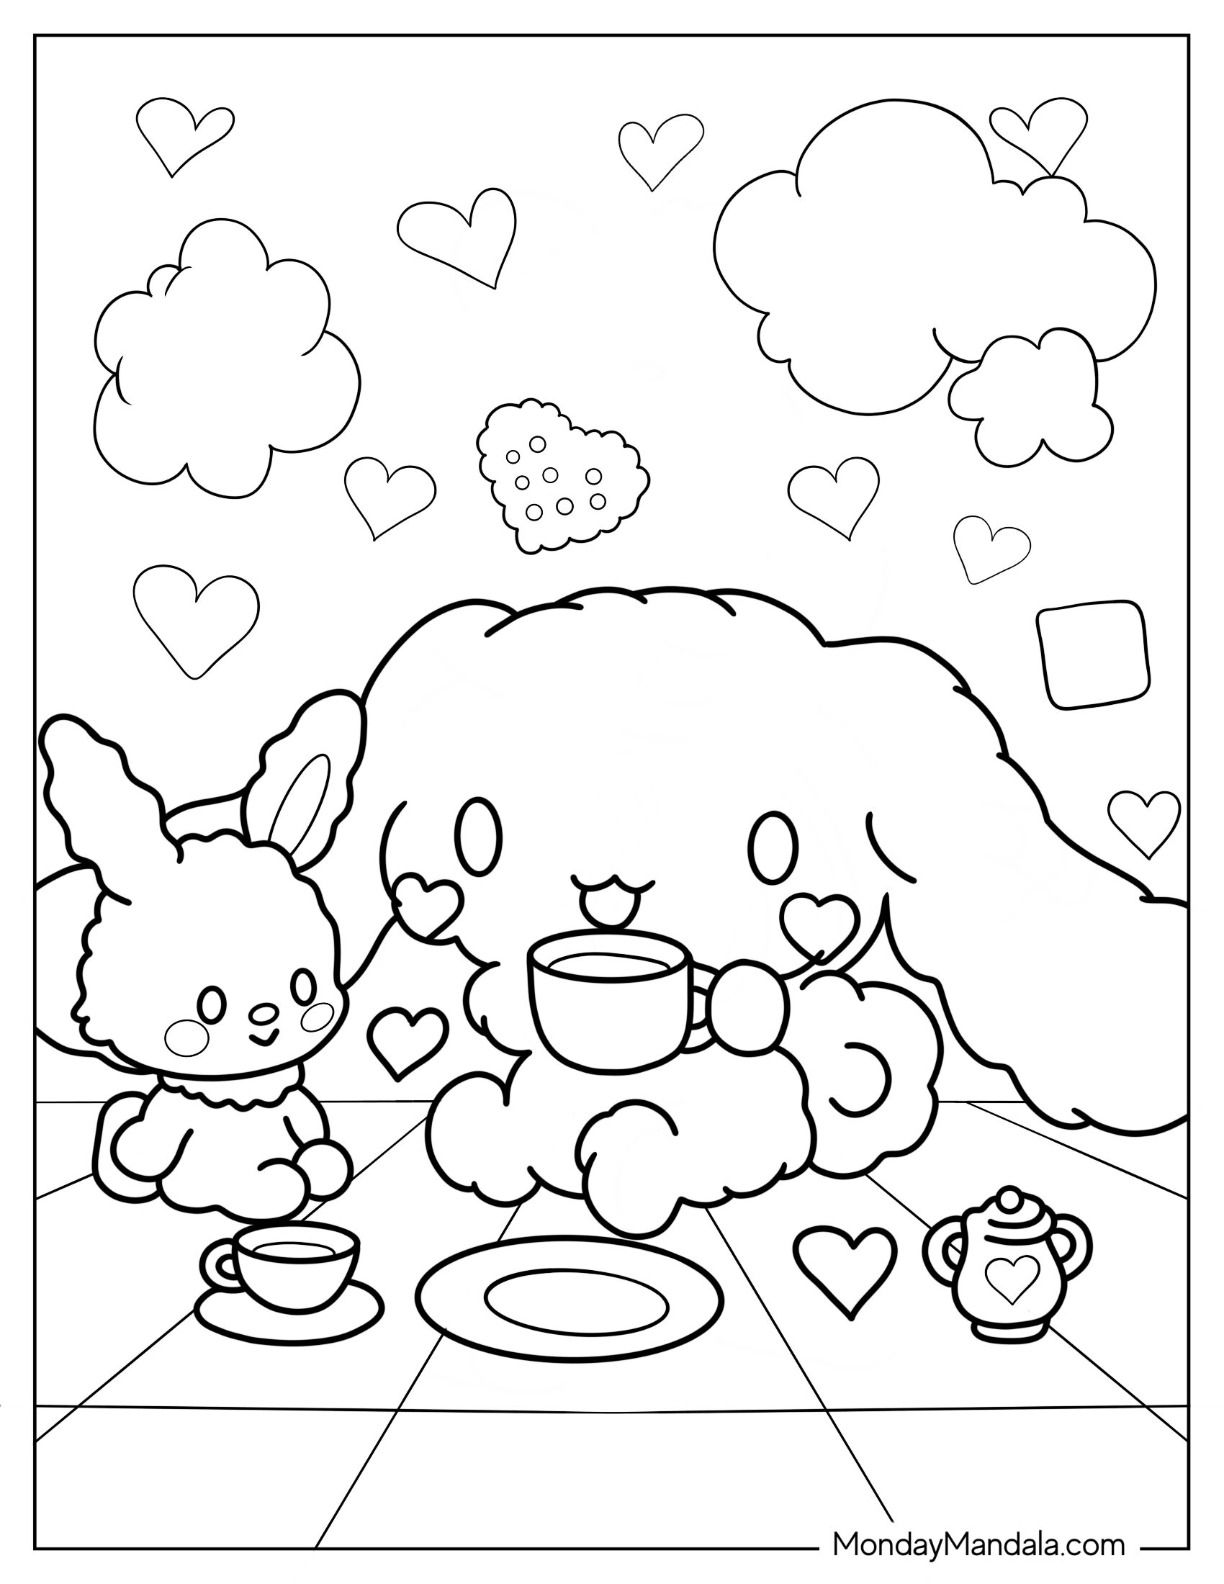 Cinnamoroll coloring pages free pdf printables hello kitty colouring pages cute coloring pages hello kitty coloring